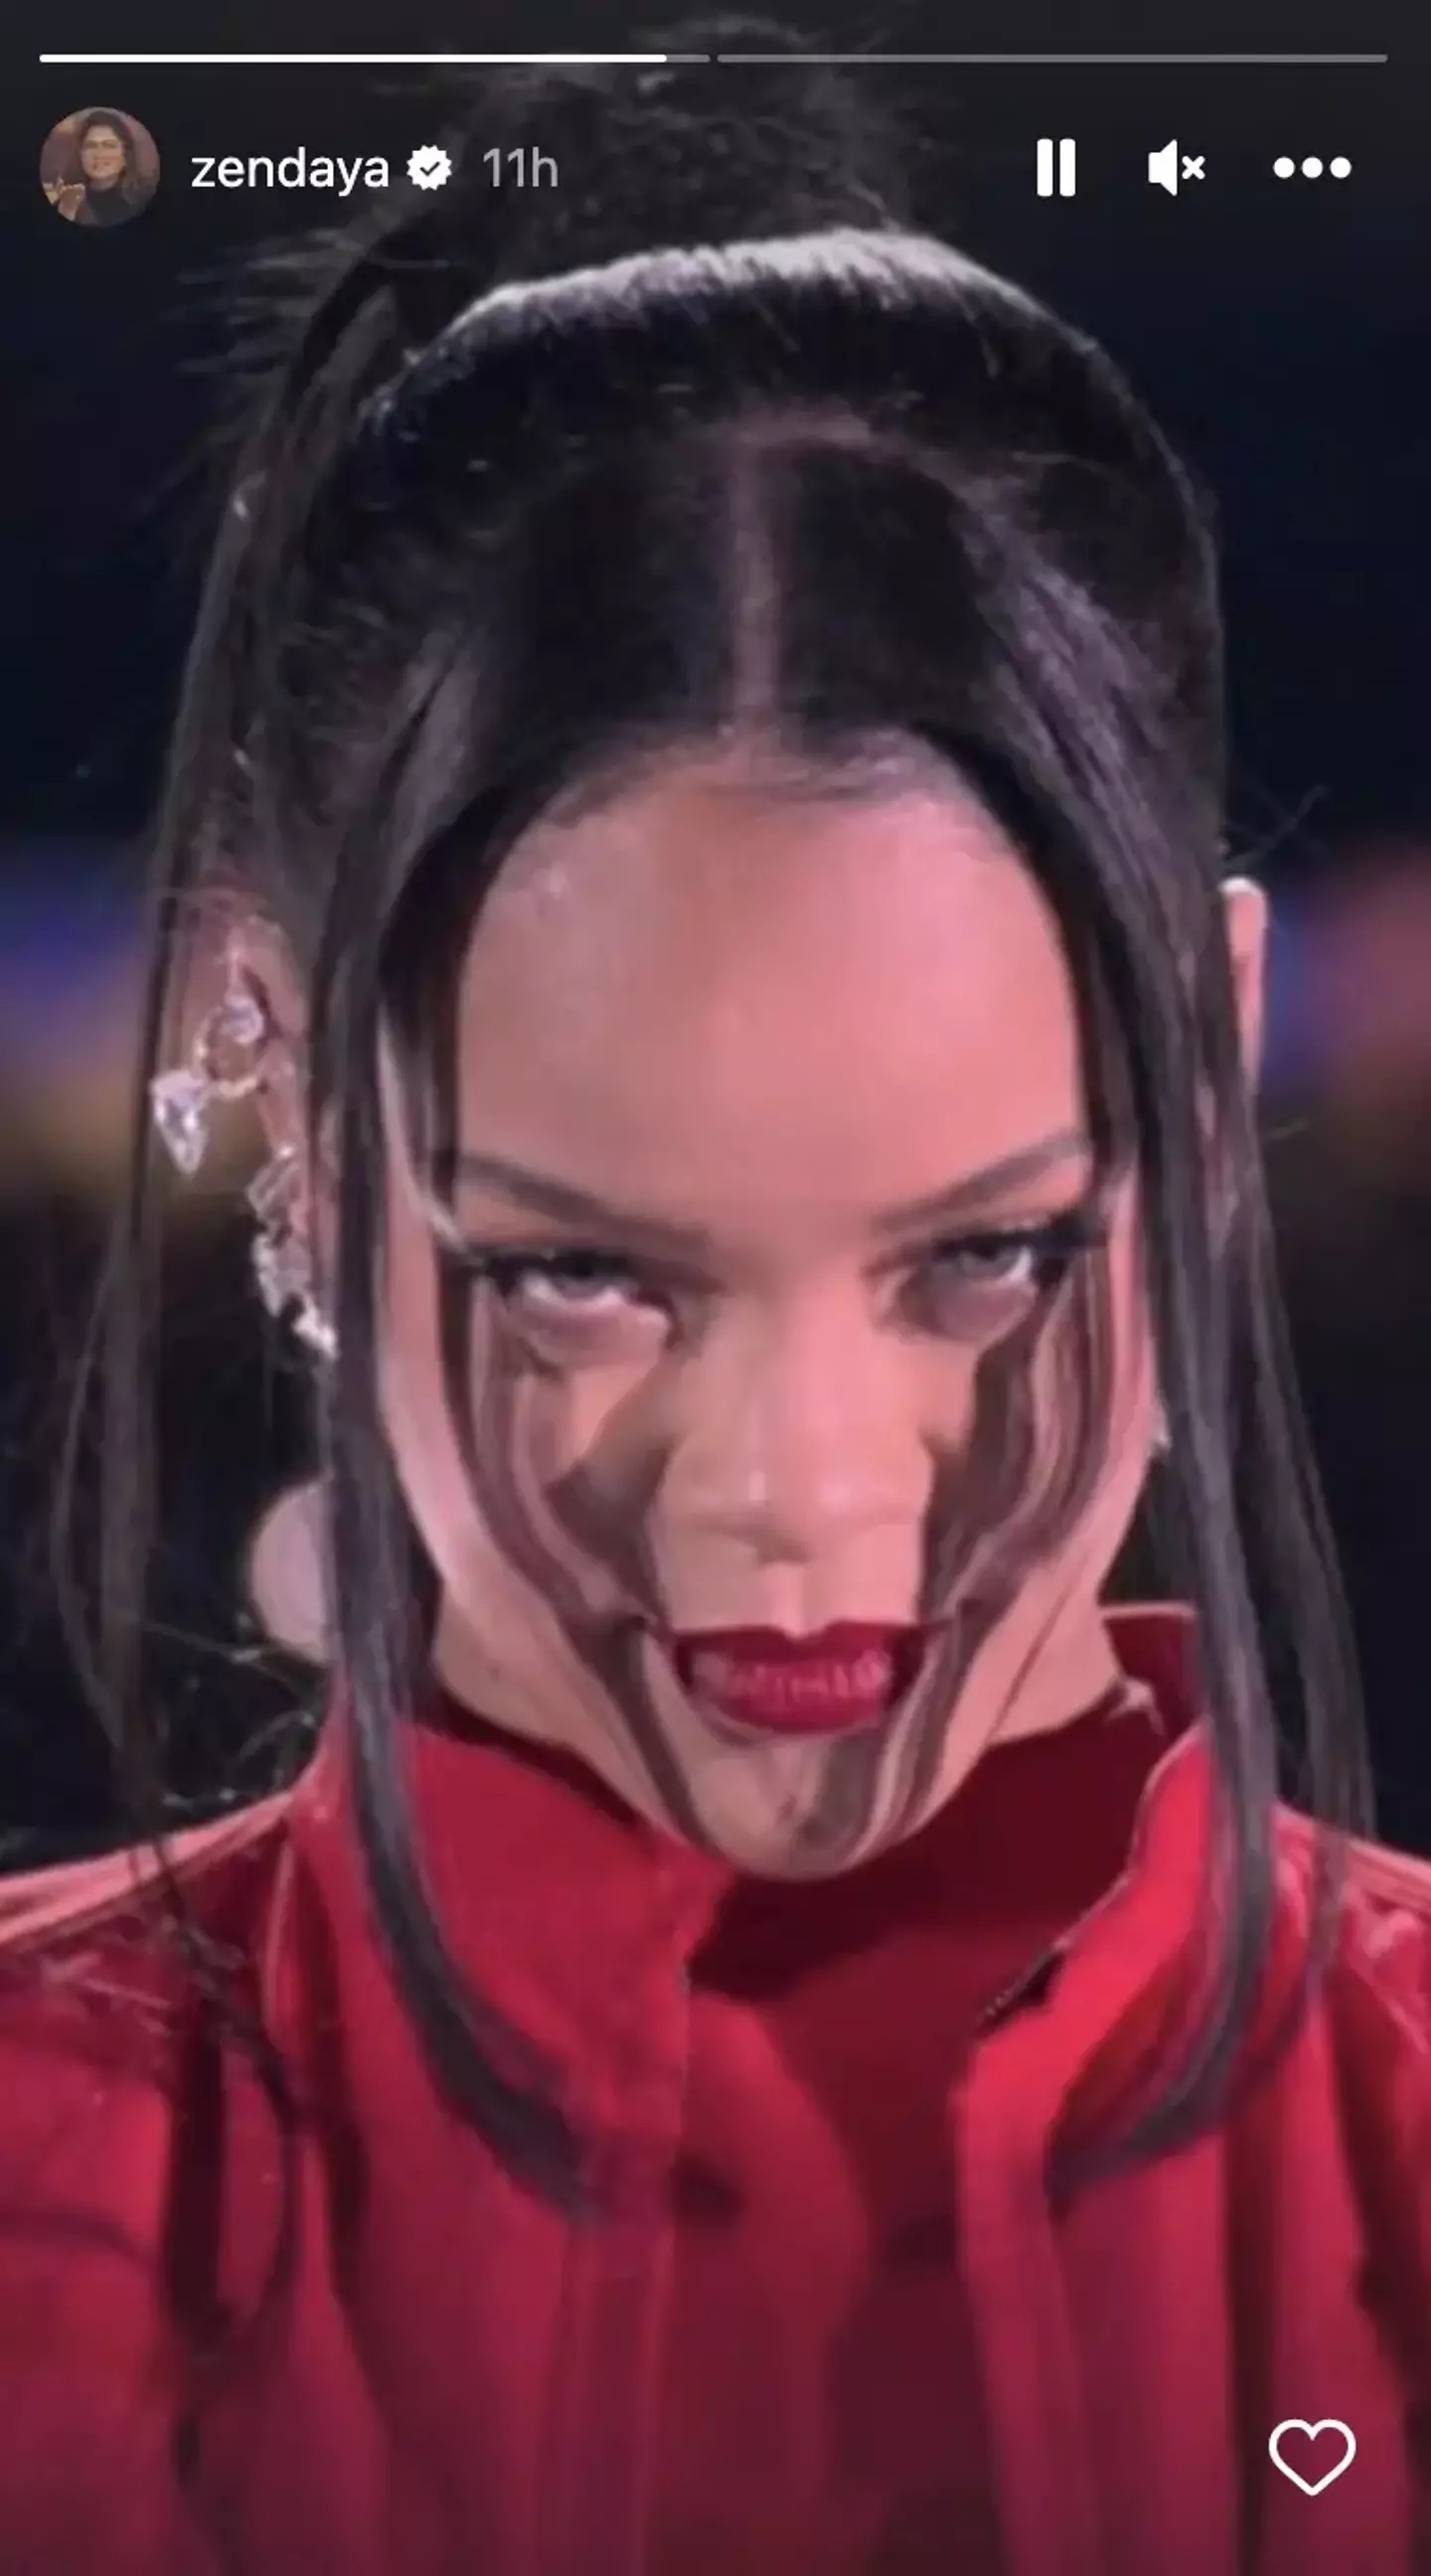 Zendaya first shared an image of Rihanna during her Superbowl performance.